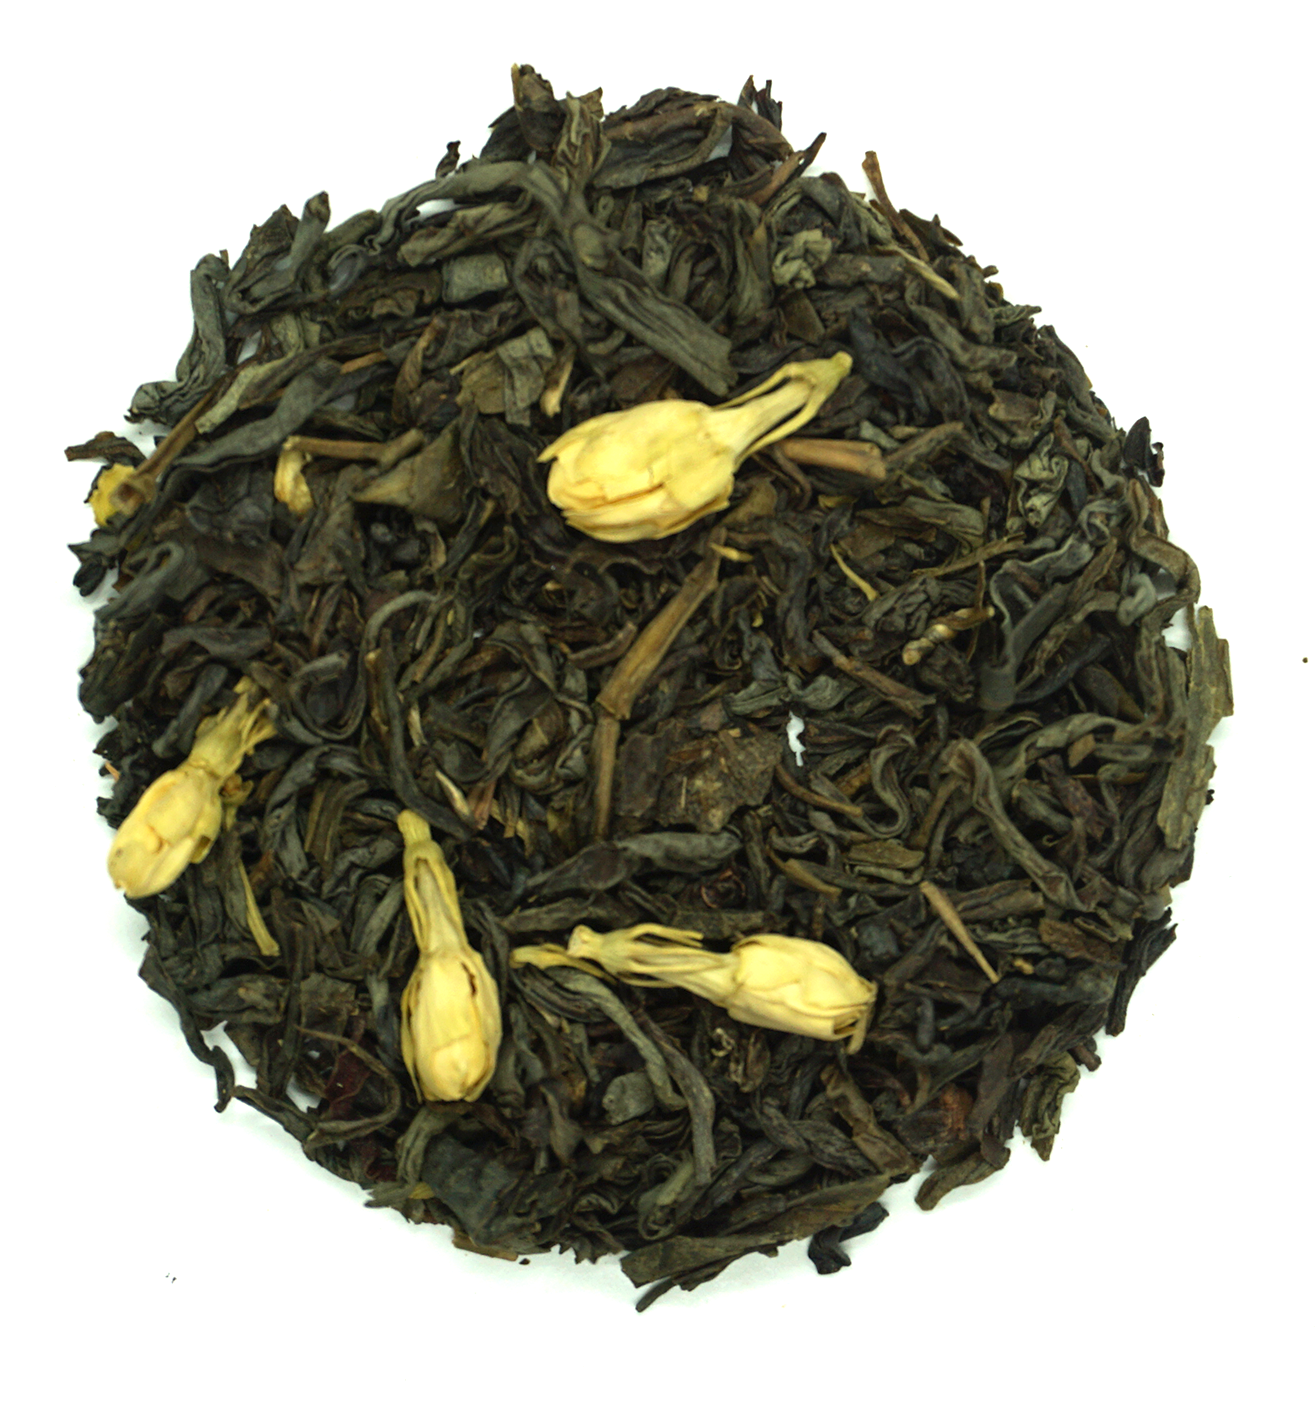 New Monk's Blend Tea